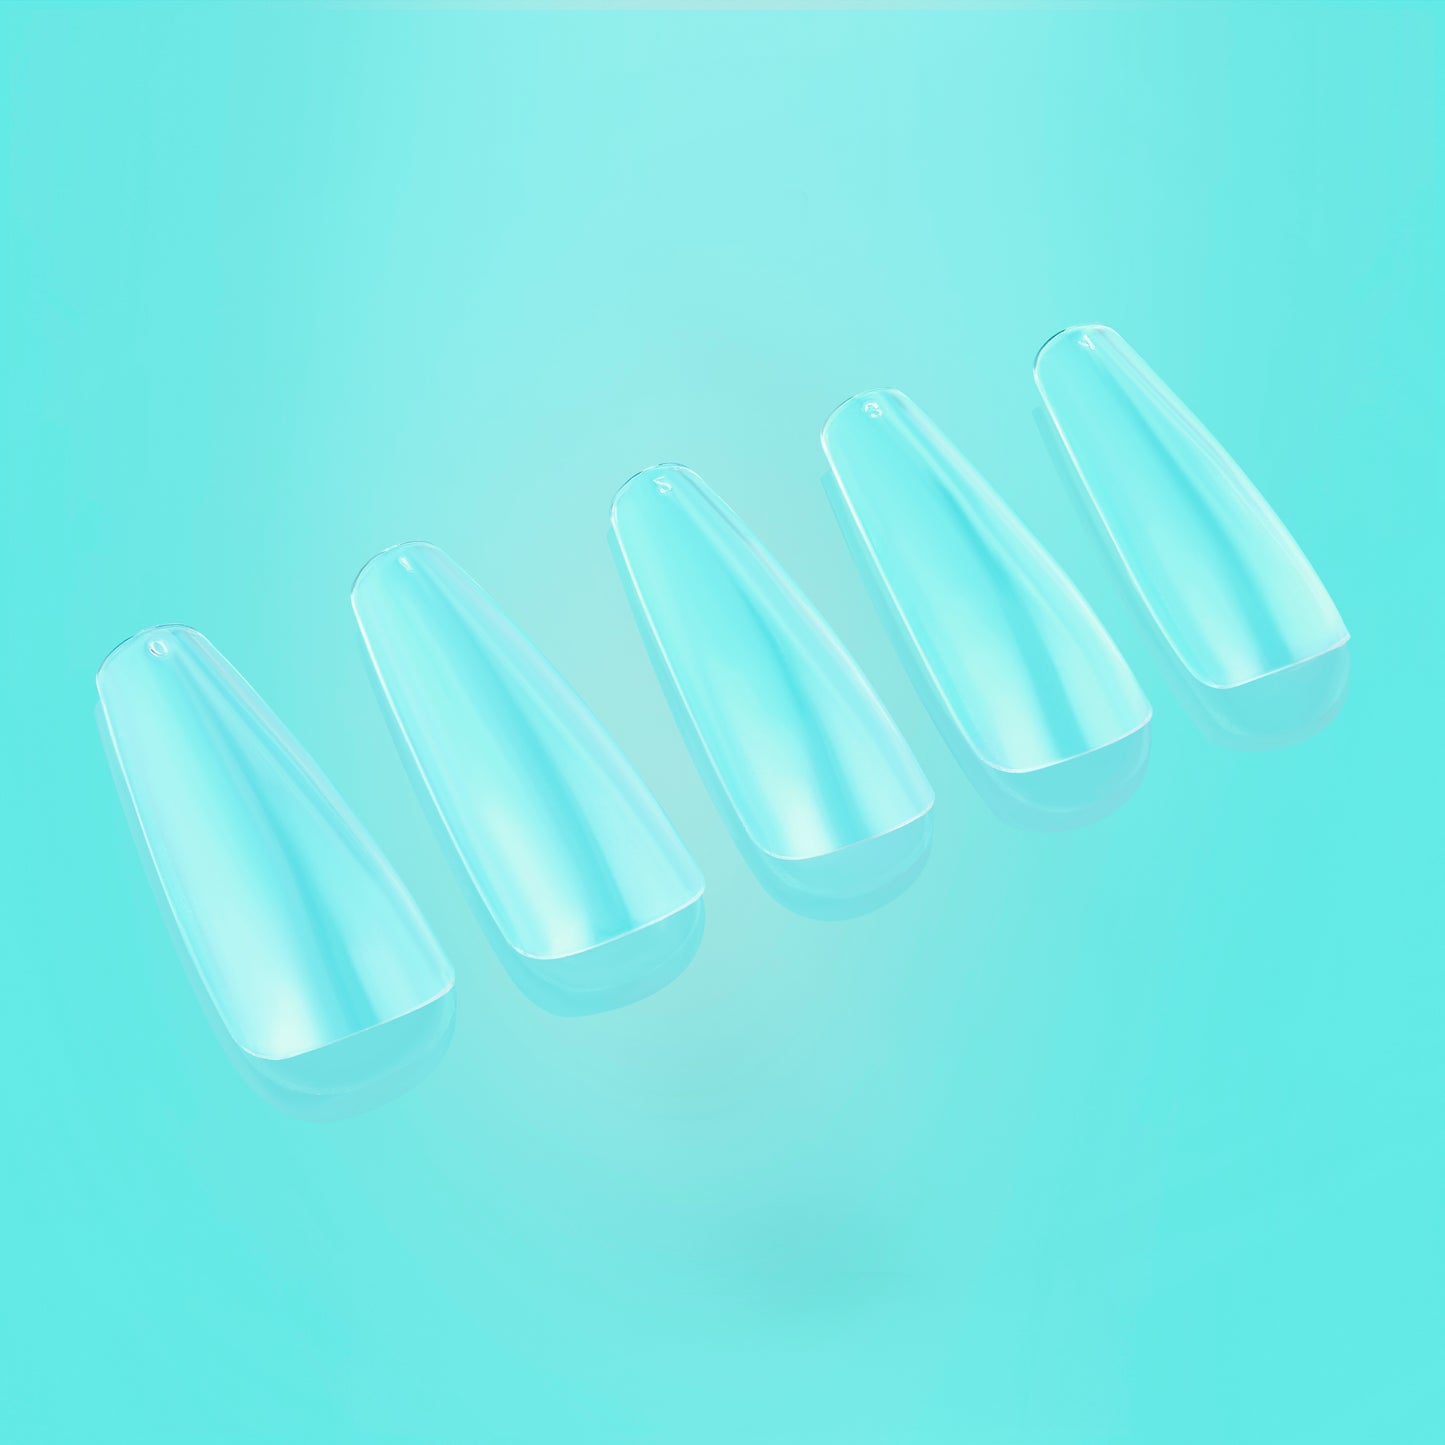 
                  
                    WHOLESALE | Nail Salon Bulk | Soft Gel Tips | Bundle Package | Long Nails Collection | Long | XL Gel Tips Package
                  
                